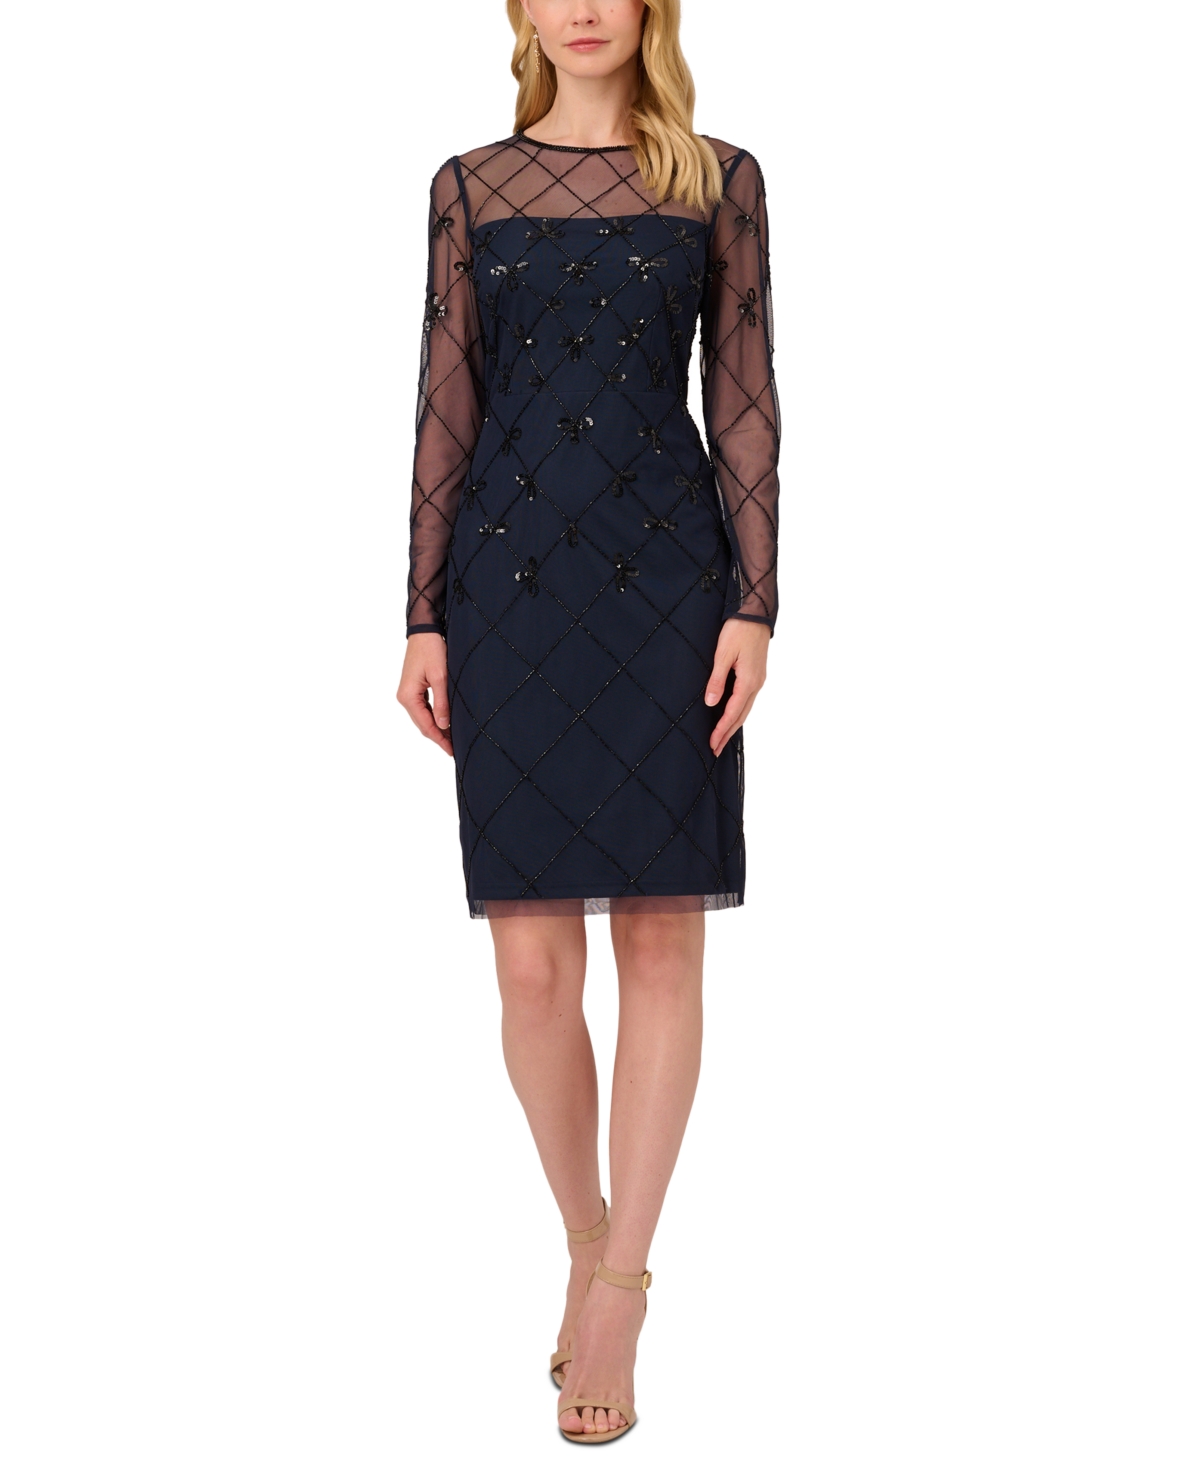 Women's Embellished Illusion Long-Sleeve Dress - Navy/Black